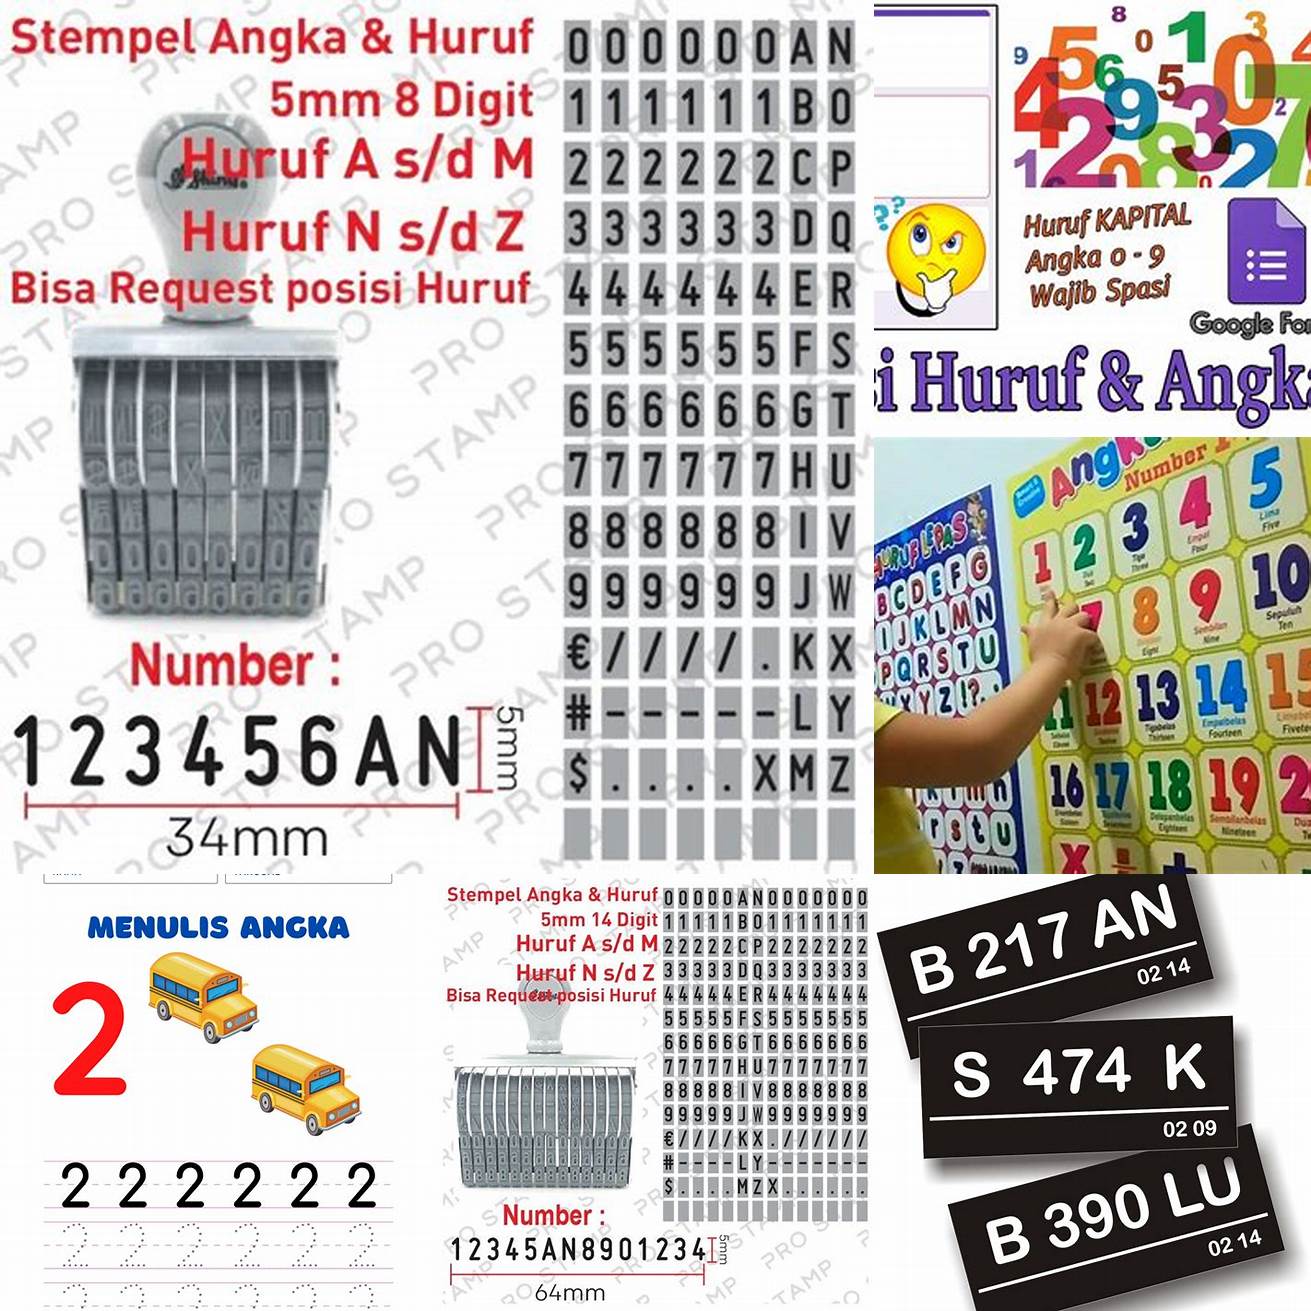 1 Kombinasi angka dan huruf misalnya BNI123abc